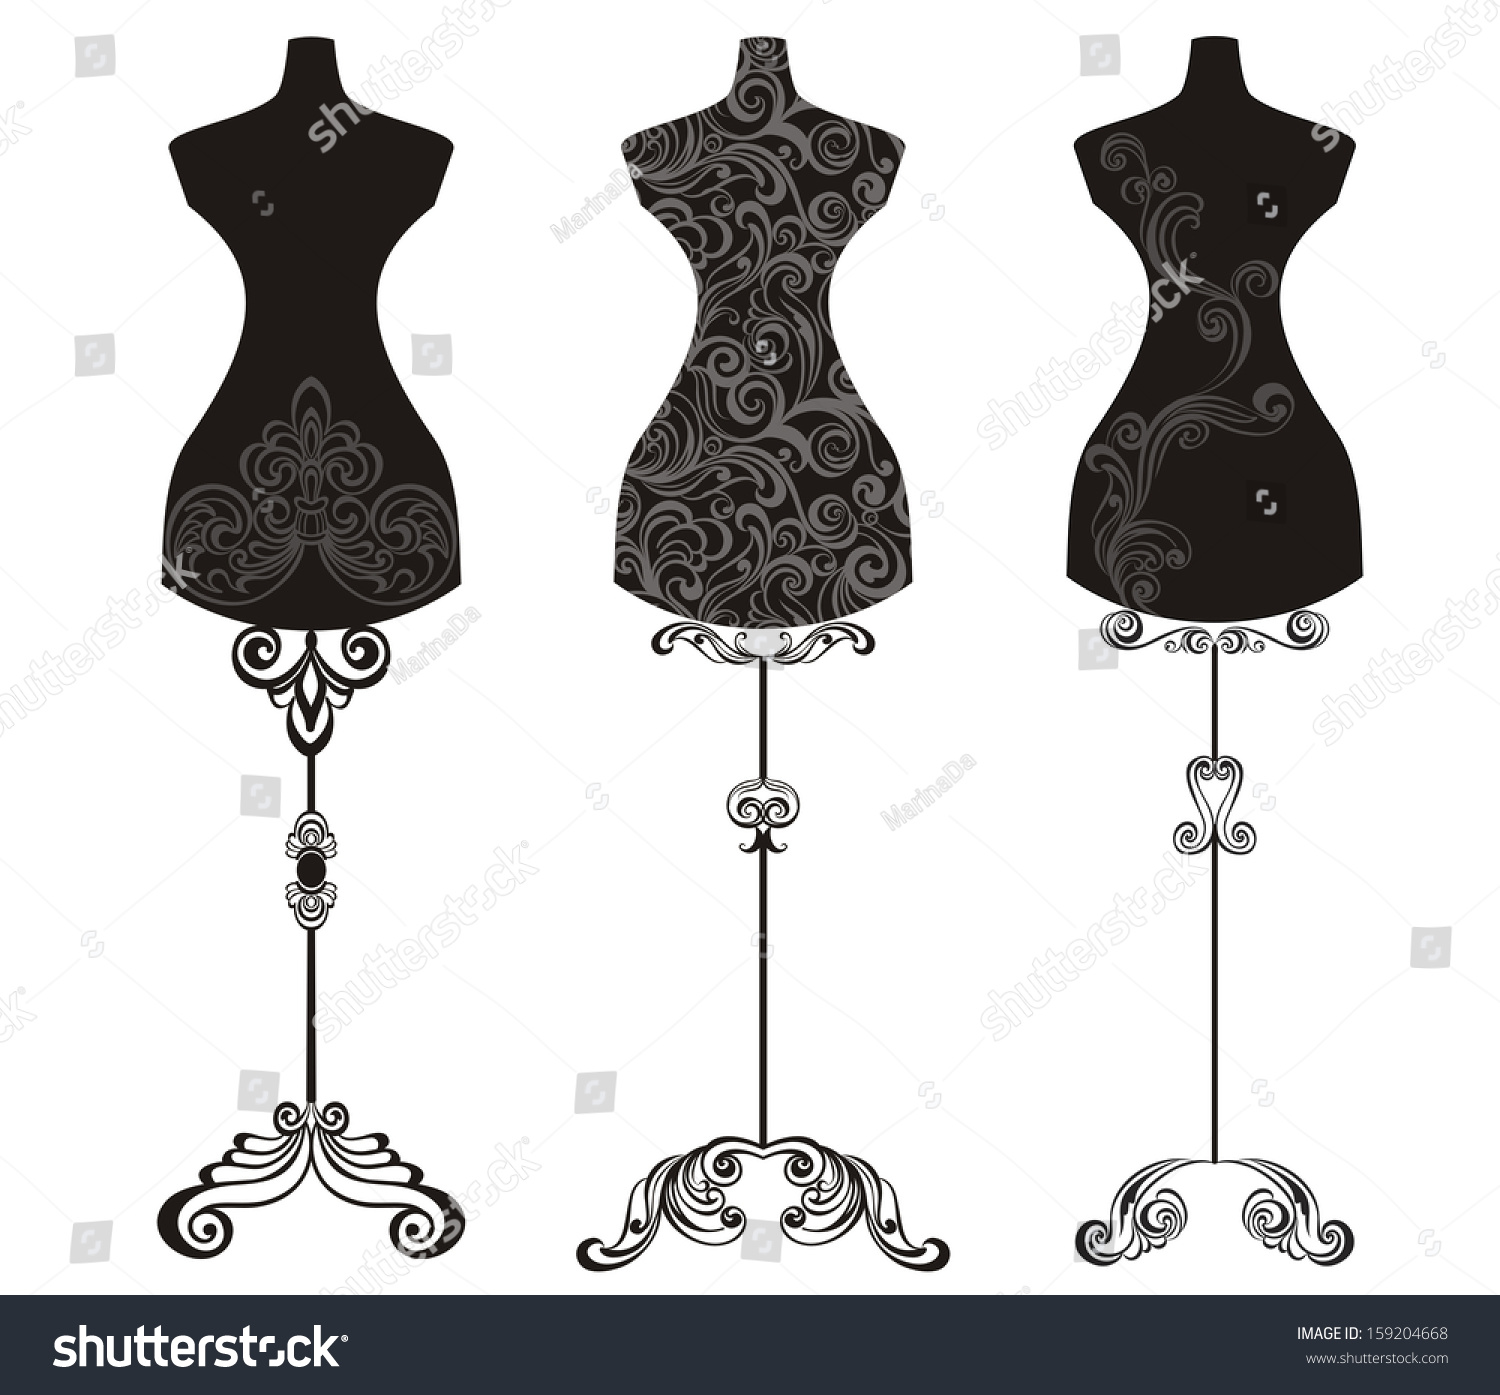 Vintage Mannequin Stock Vector Illustration 159204668 : Shutterstock